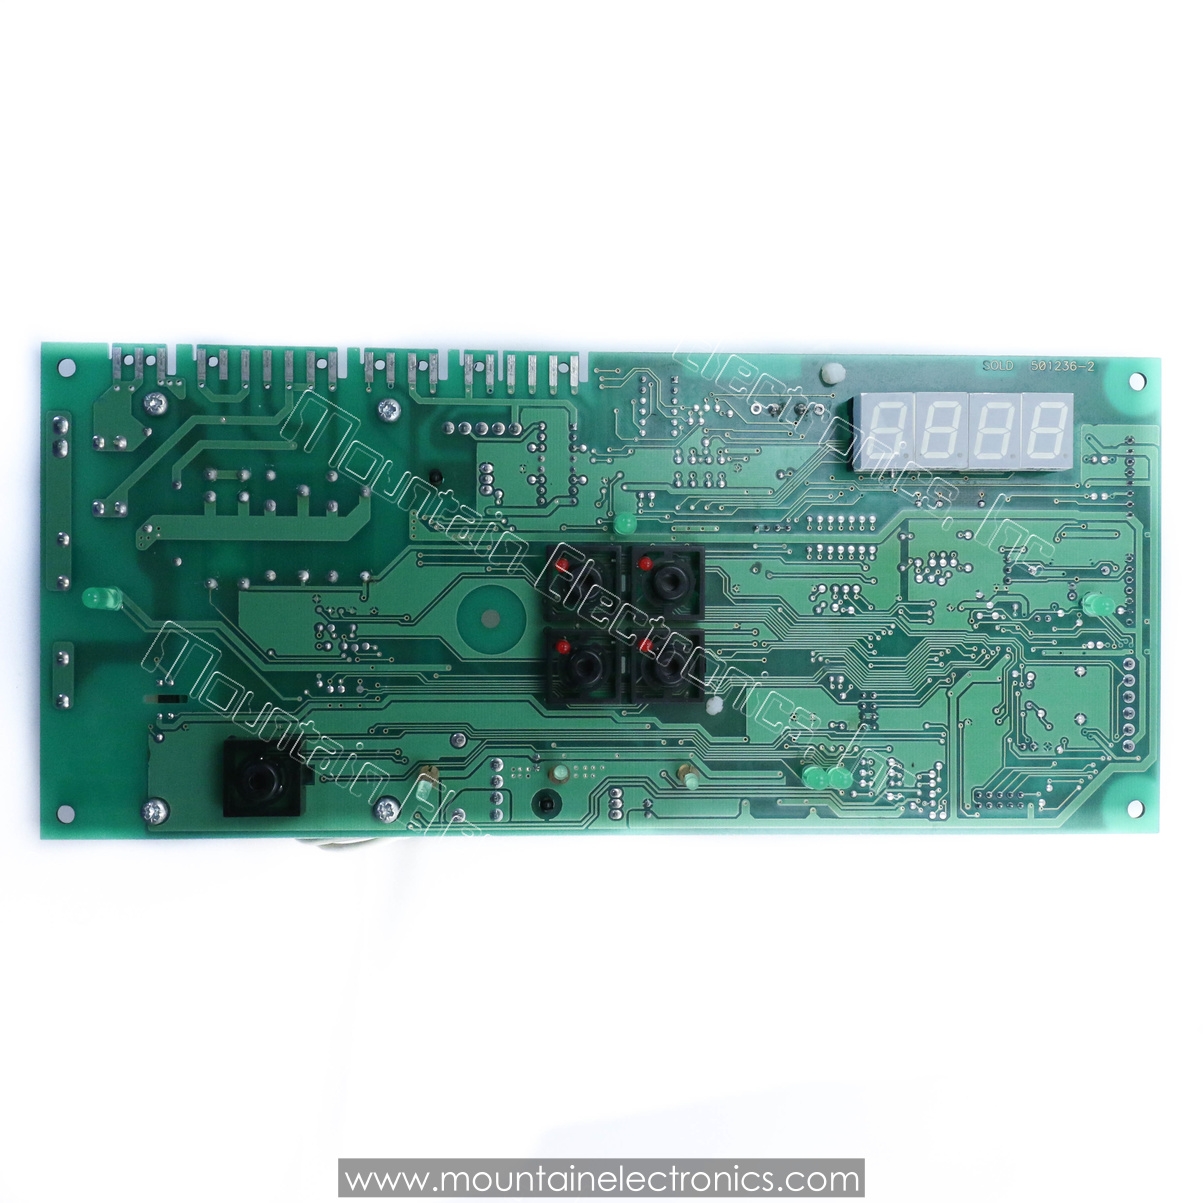 Continental Girbau EH025 G339606K 501785-01 MICRO Board w Power Supply Touch Pad 